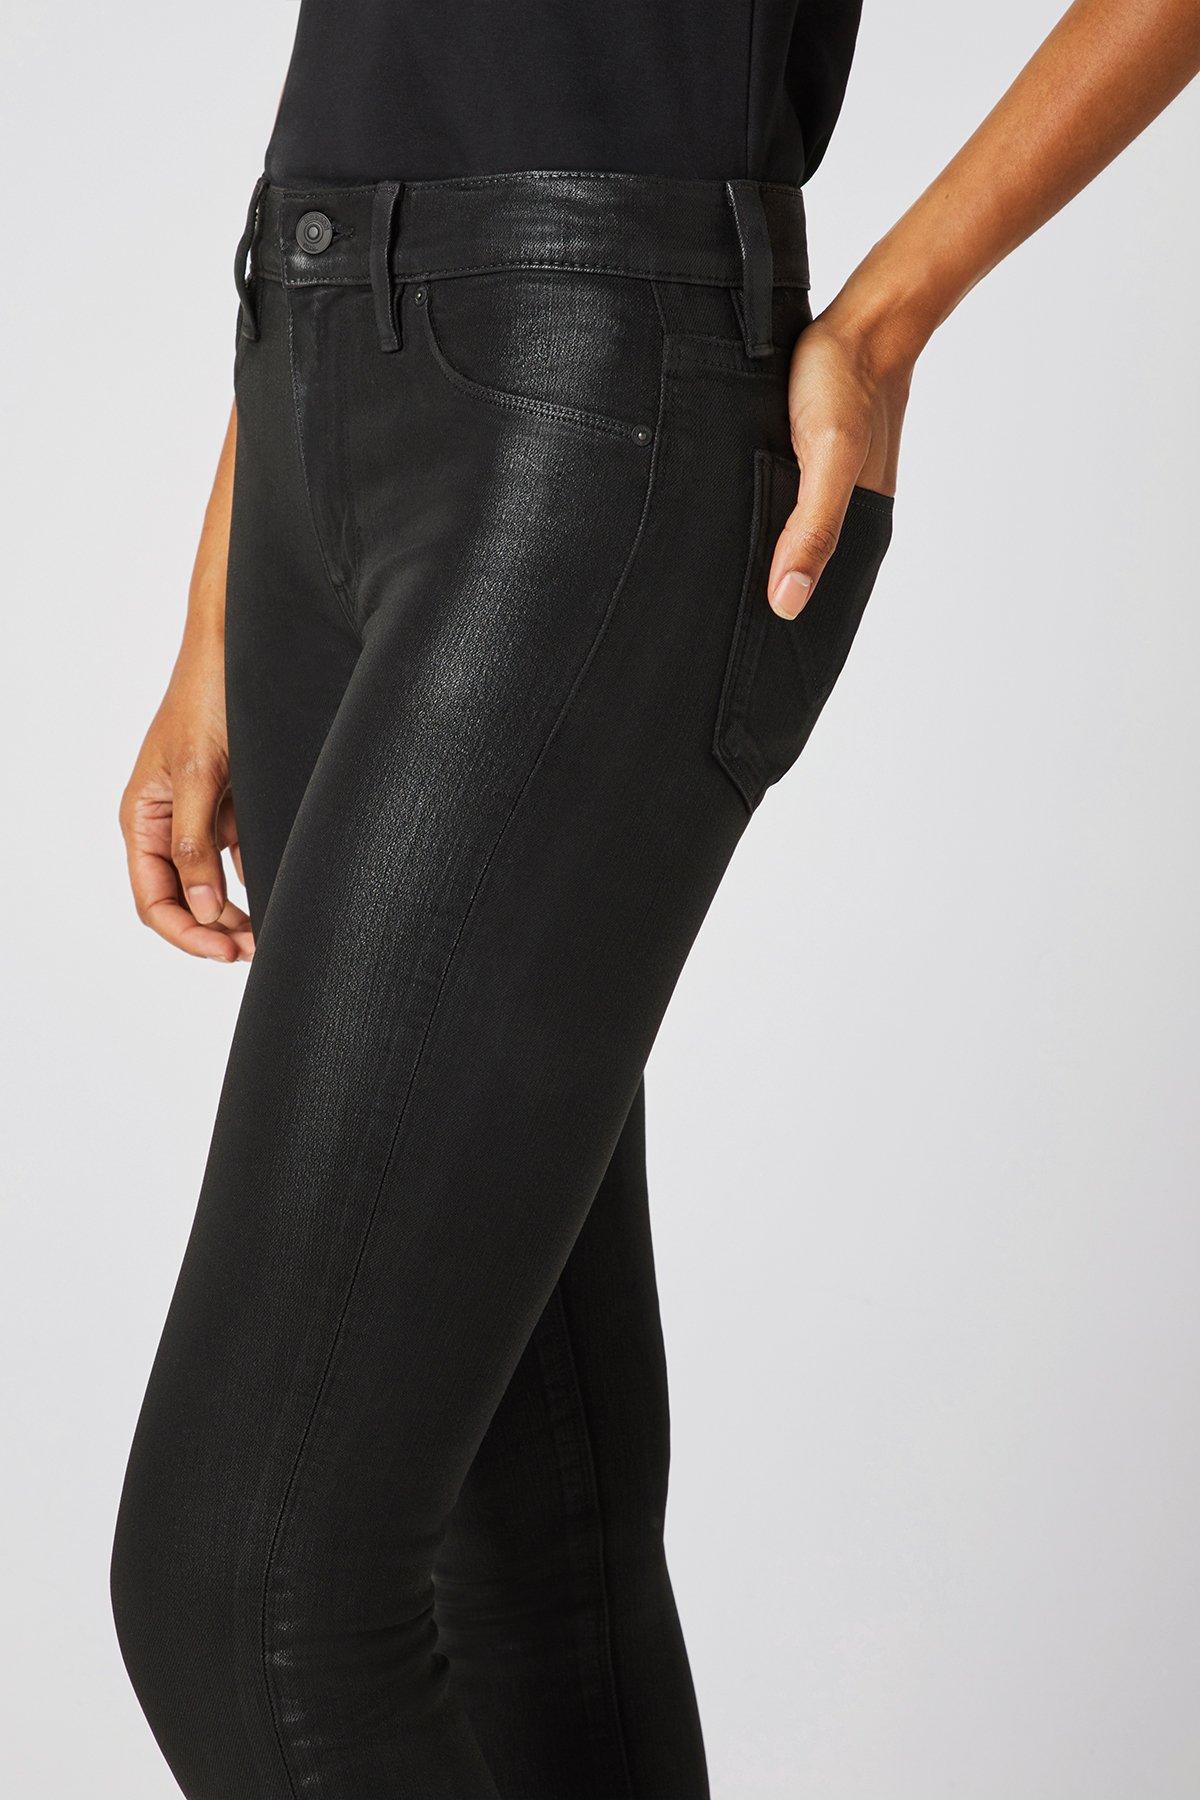 Hudson Jeans Denim Barbara High-rise Super Skinny Ankle Jean in Black